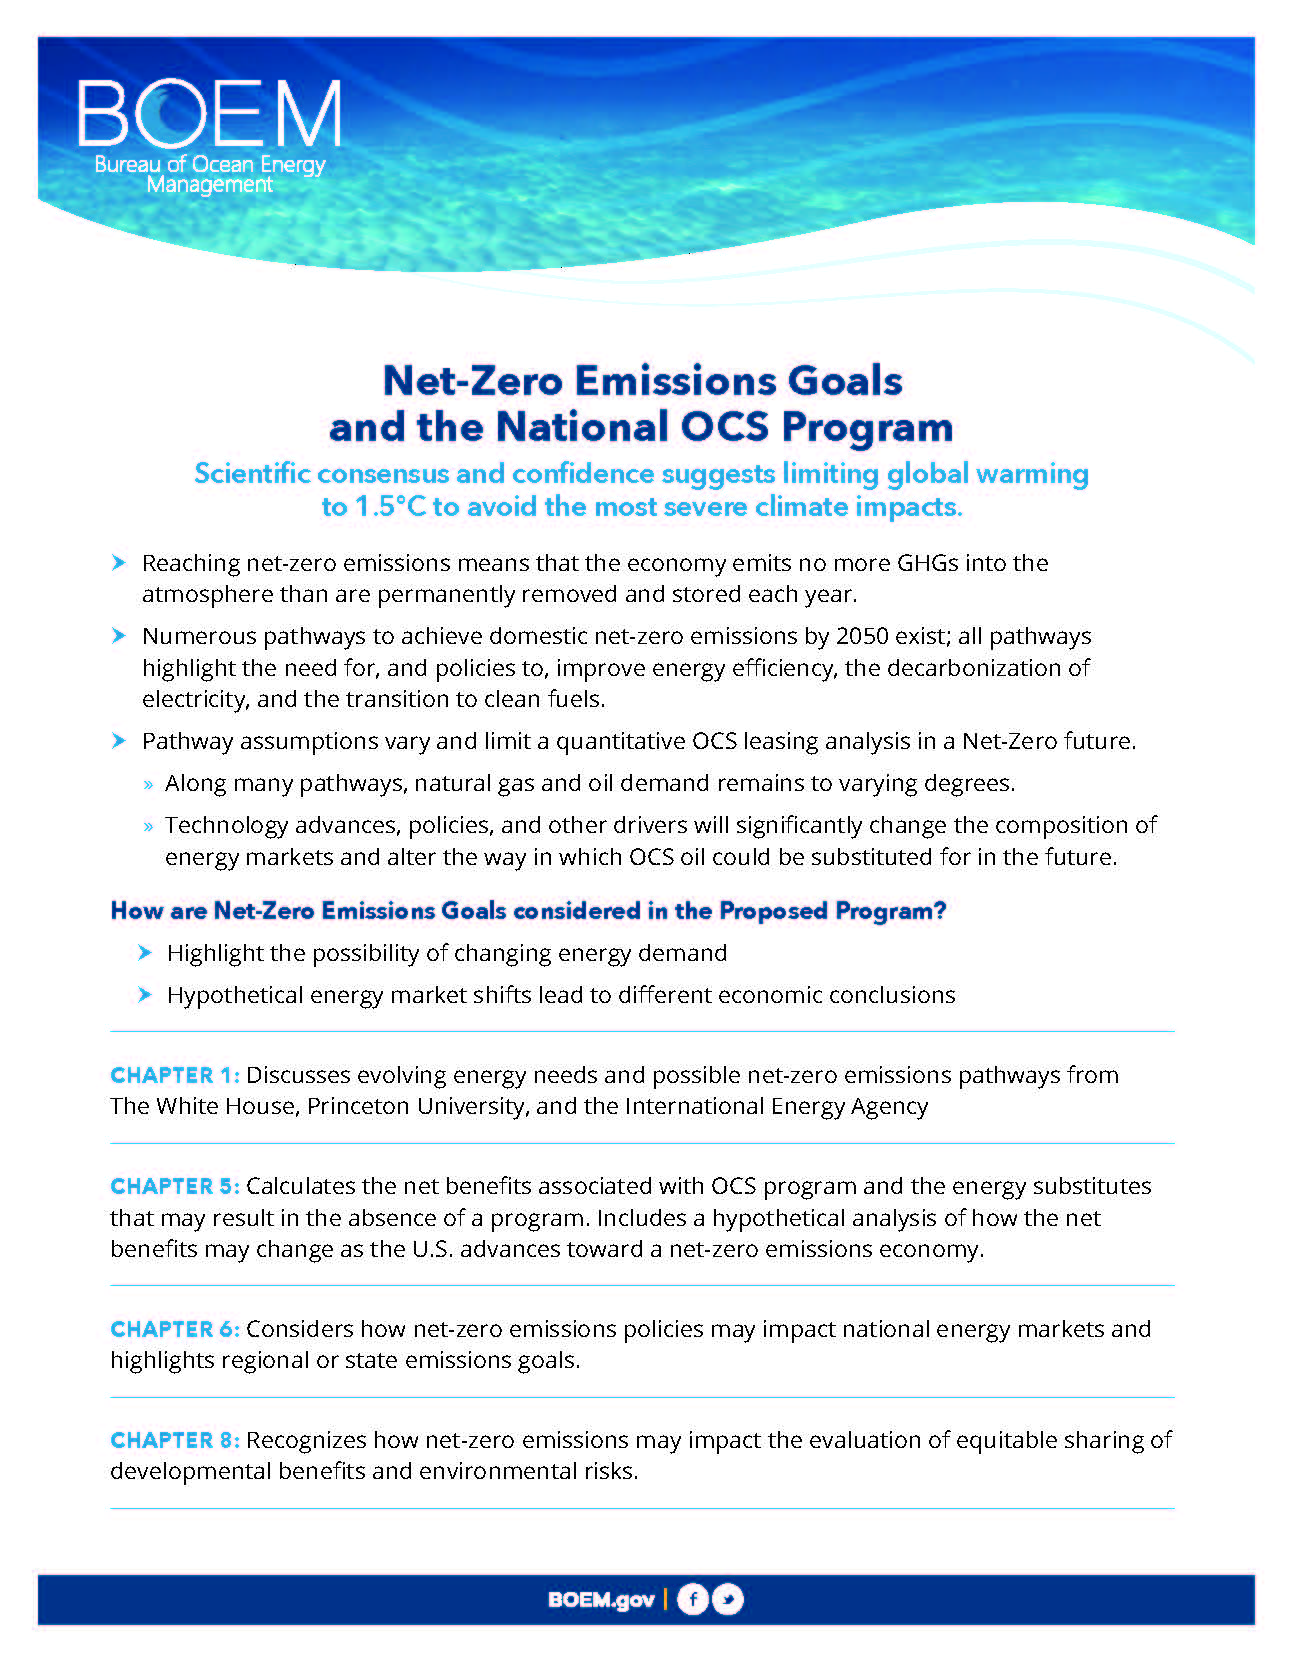 Net-Zero Emissions Goals and the National OCS Program